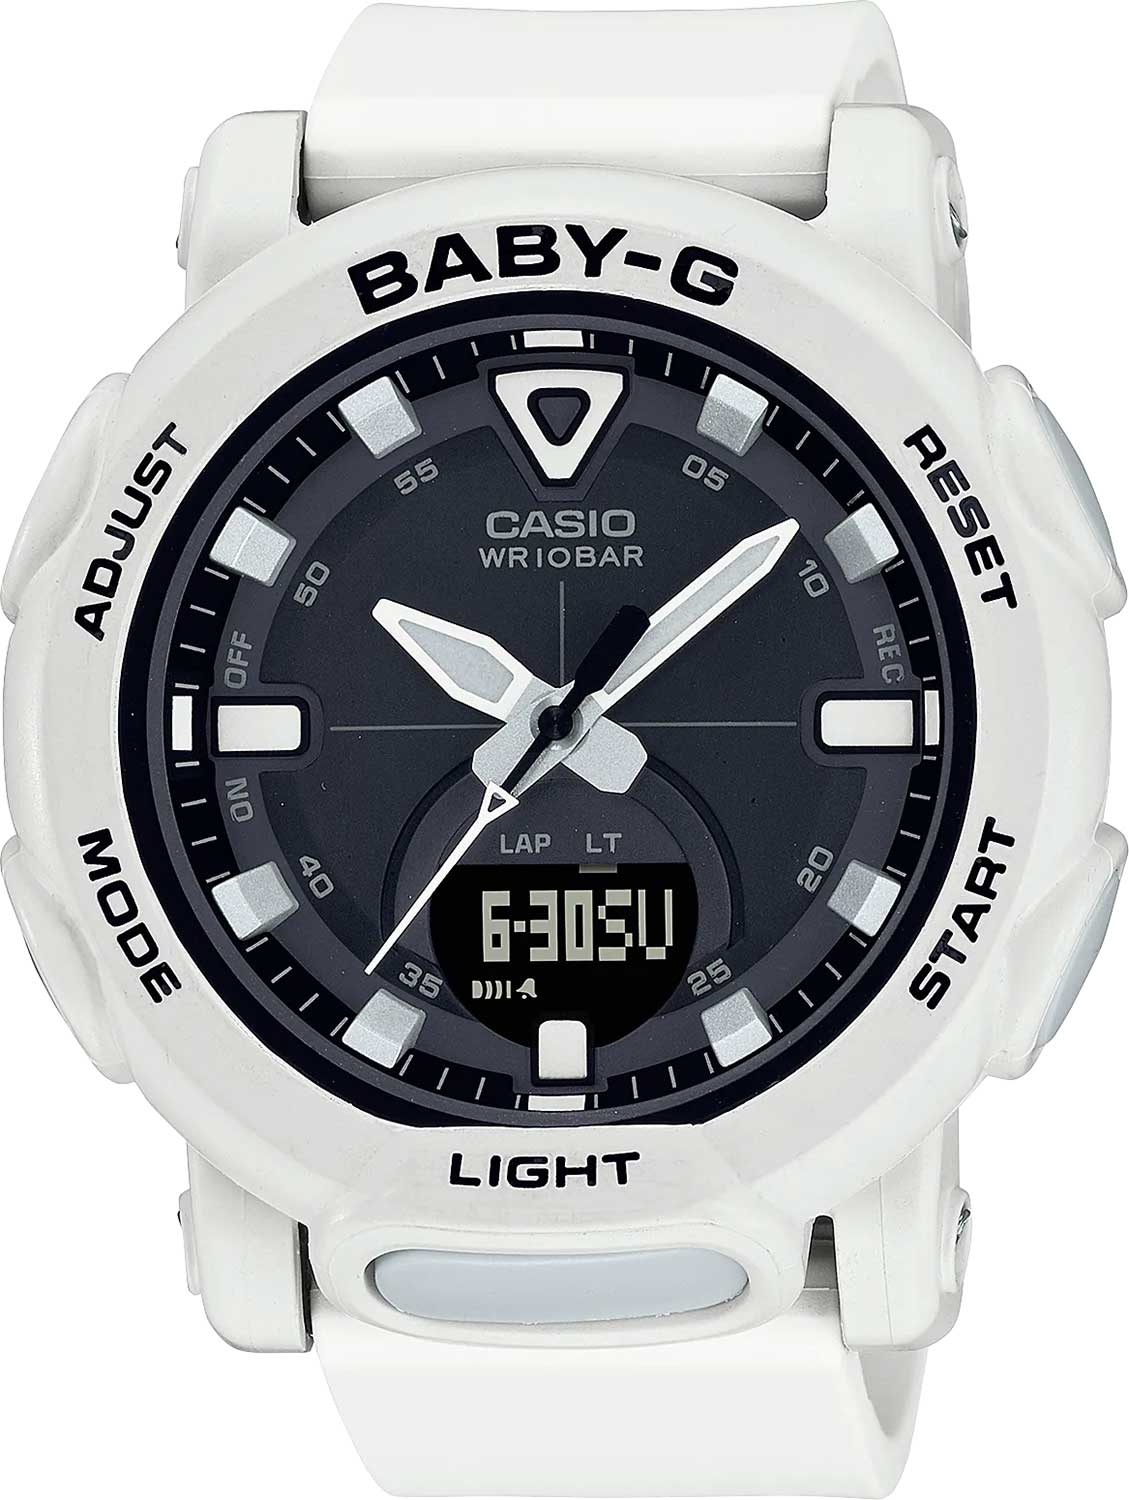    Casio Baby-G BGA-310-7A2  